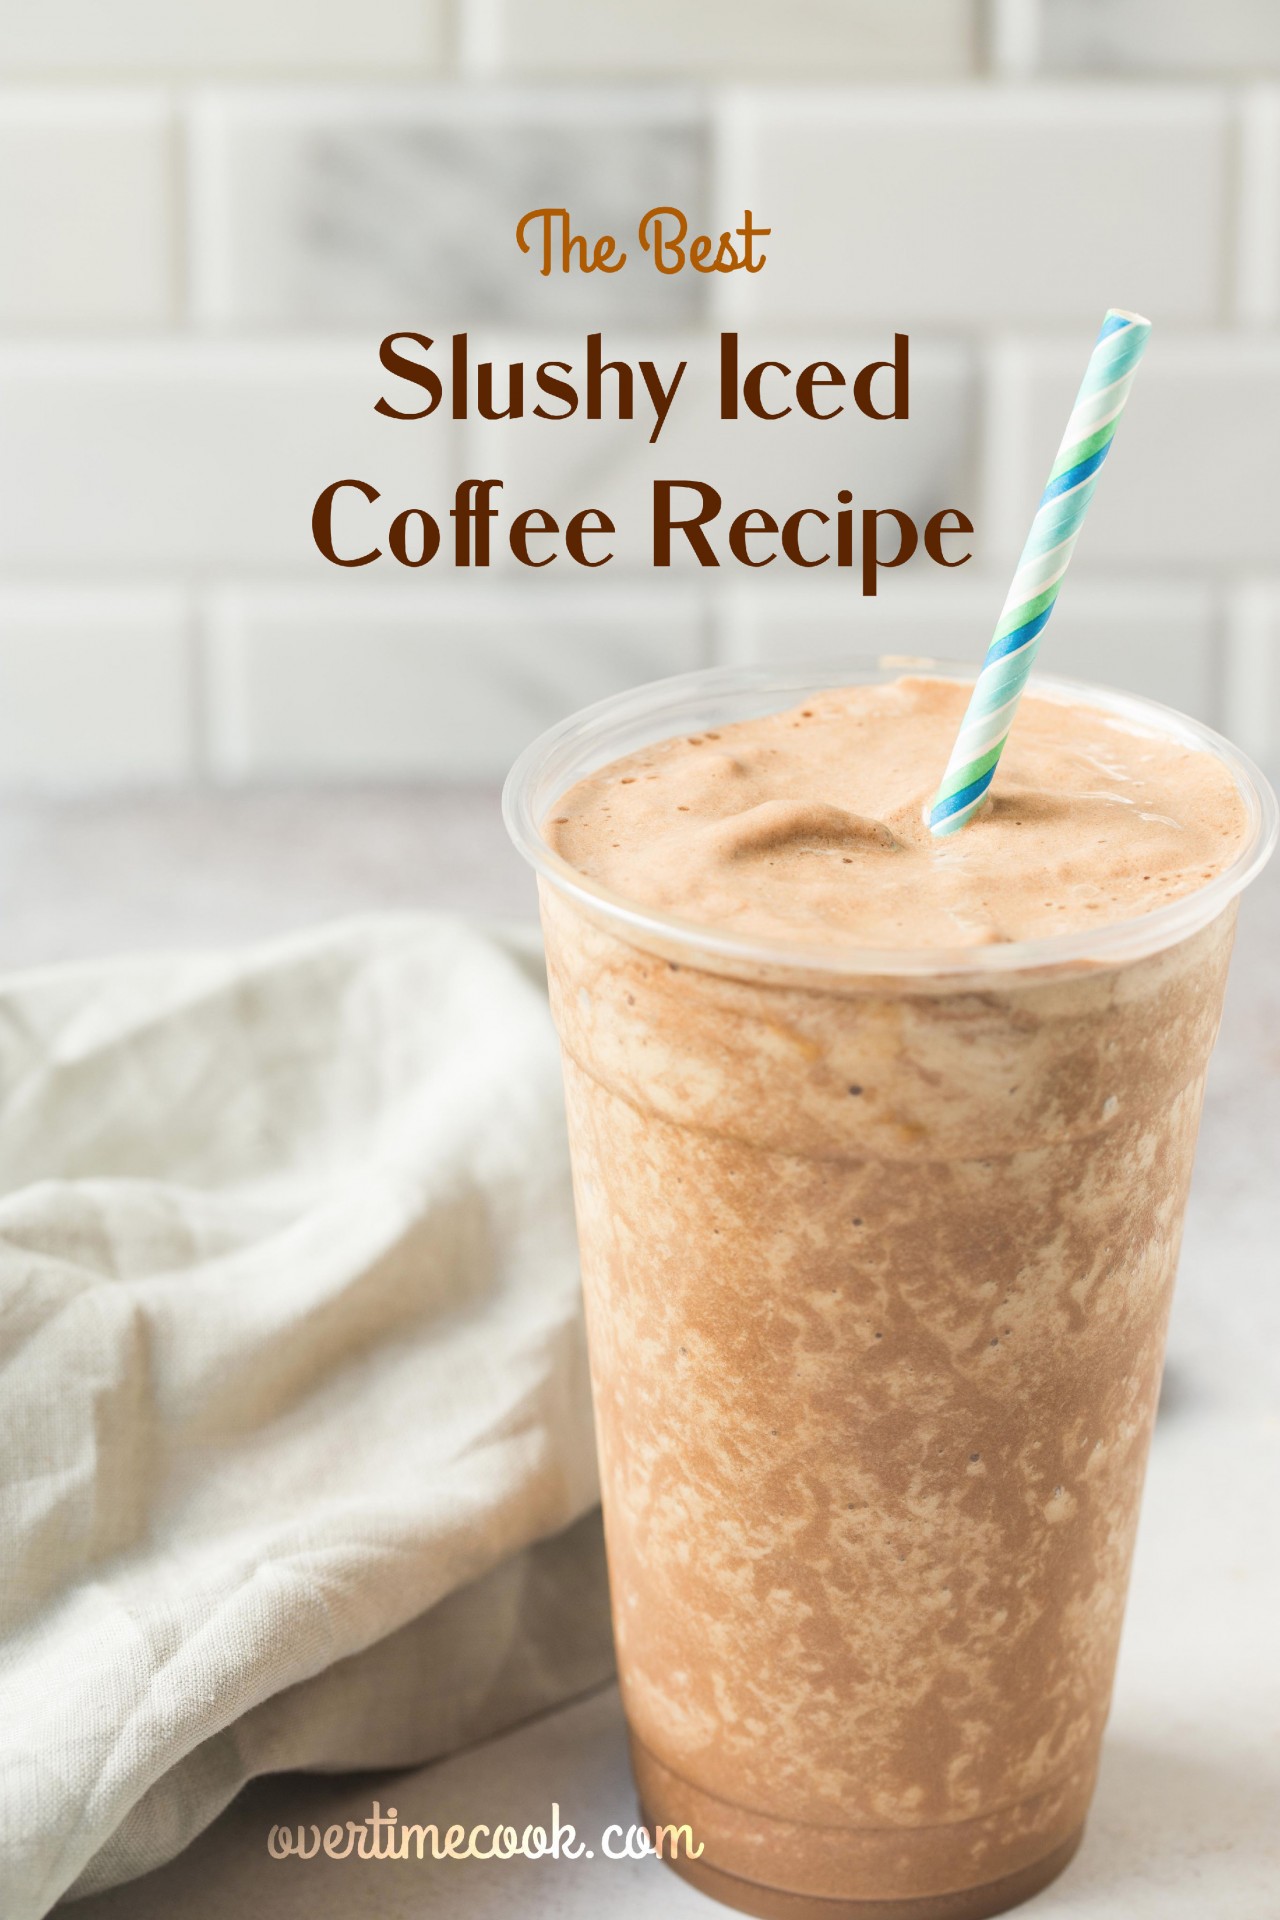 Iced Coffee Machine Recipes